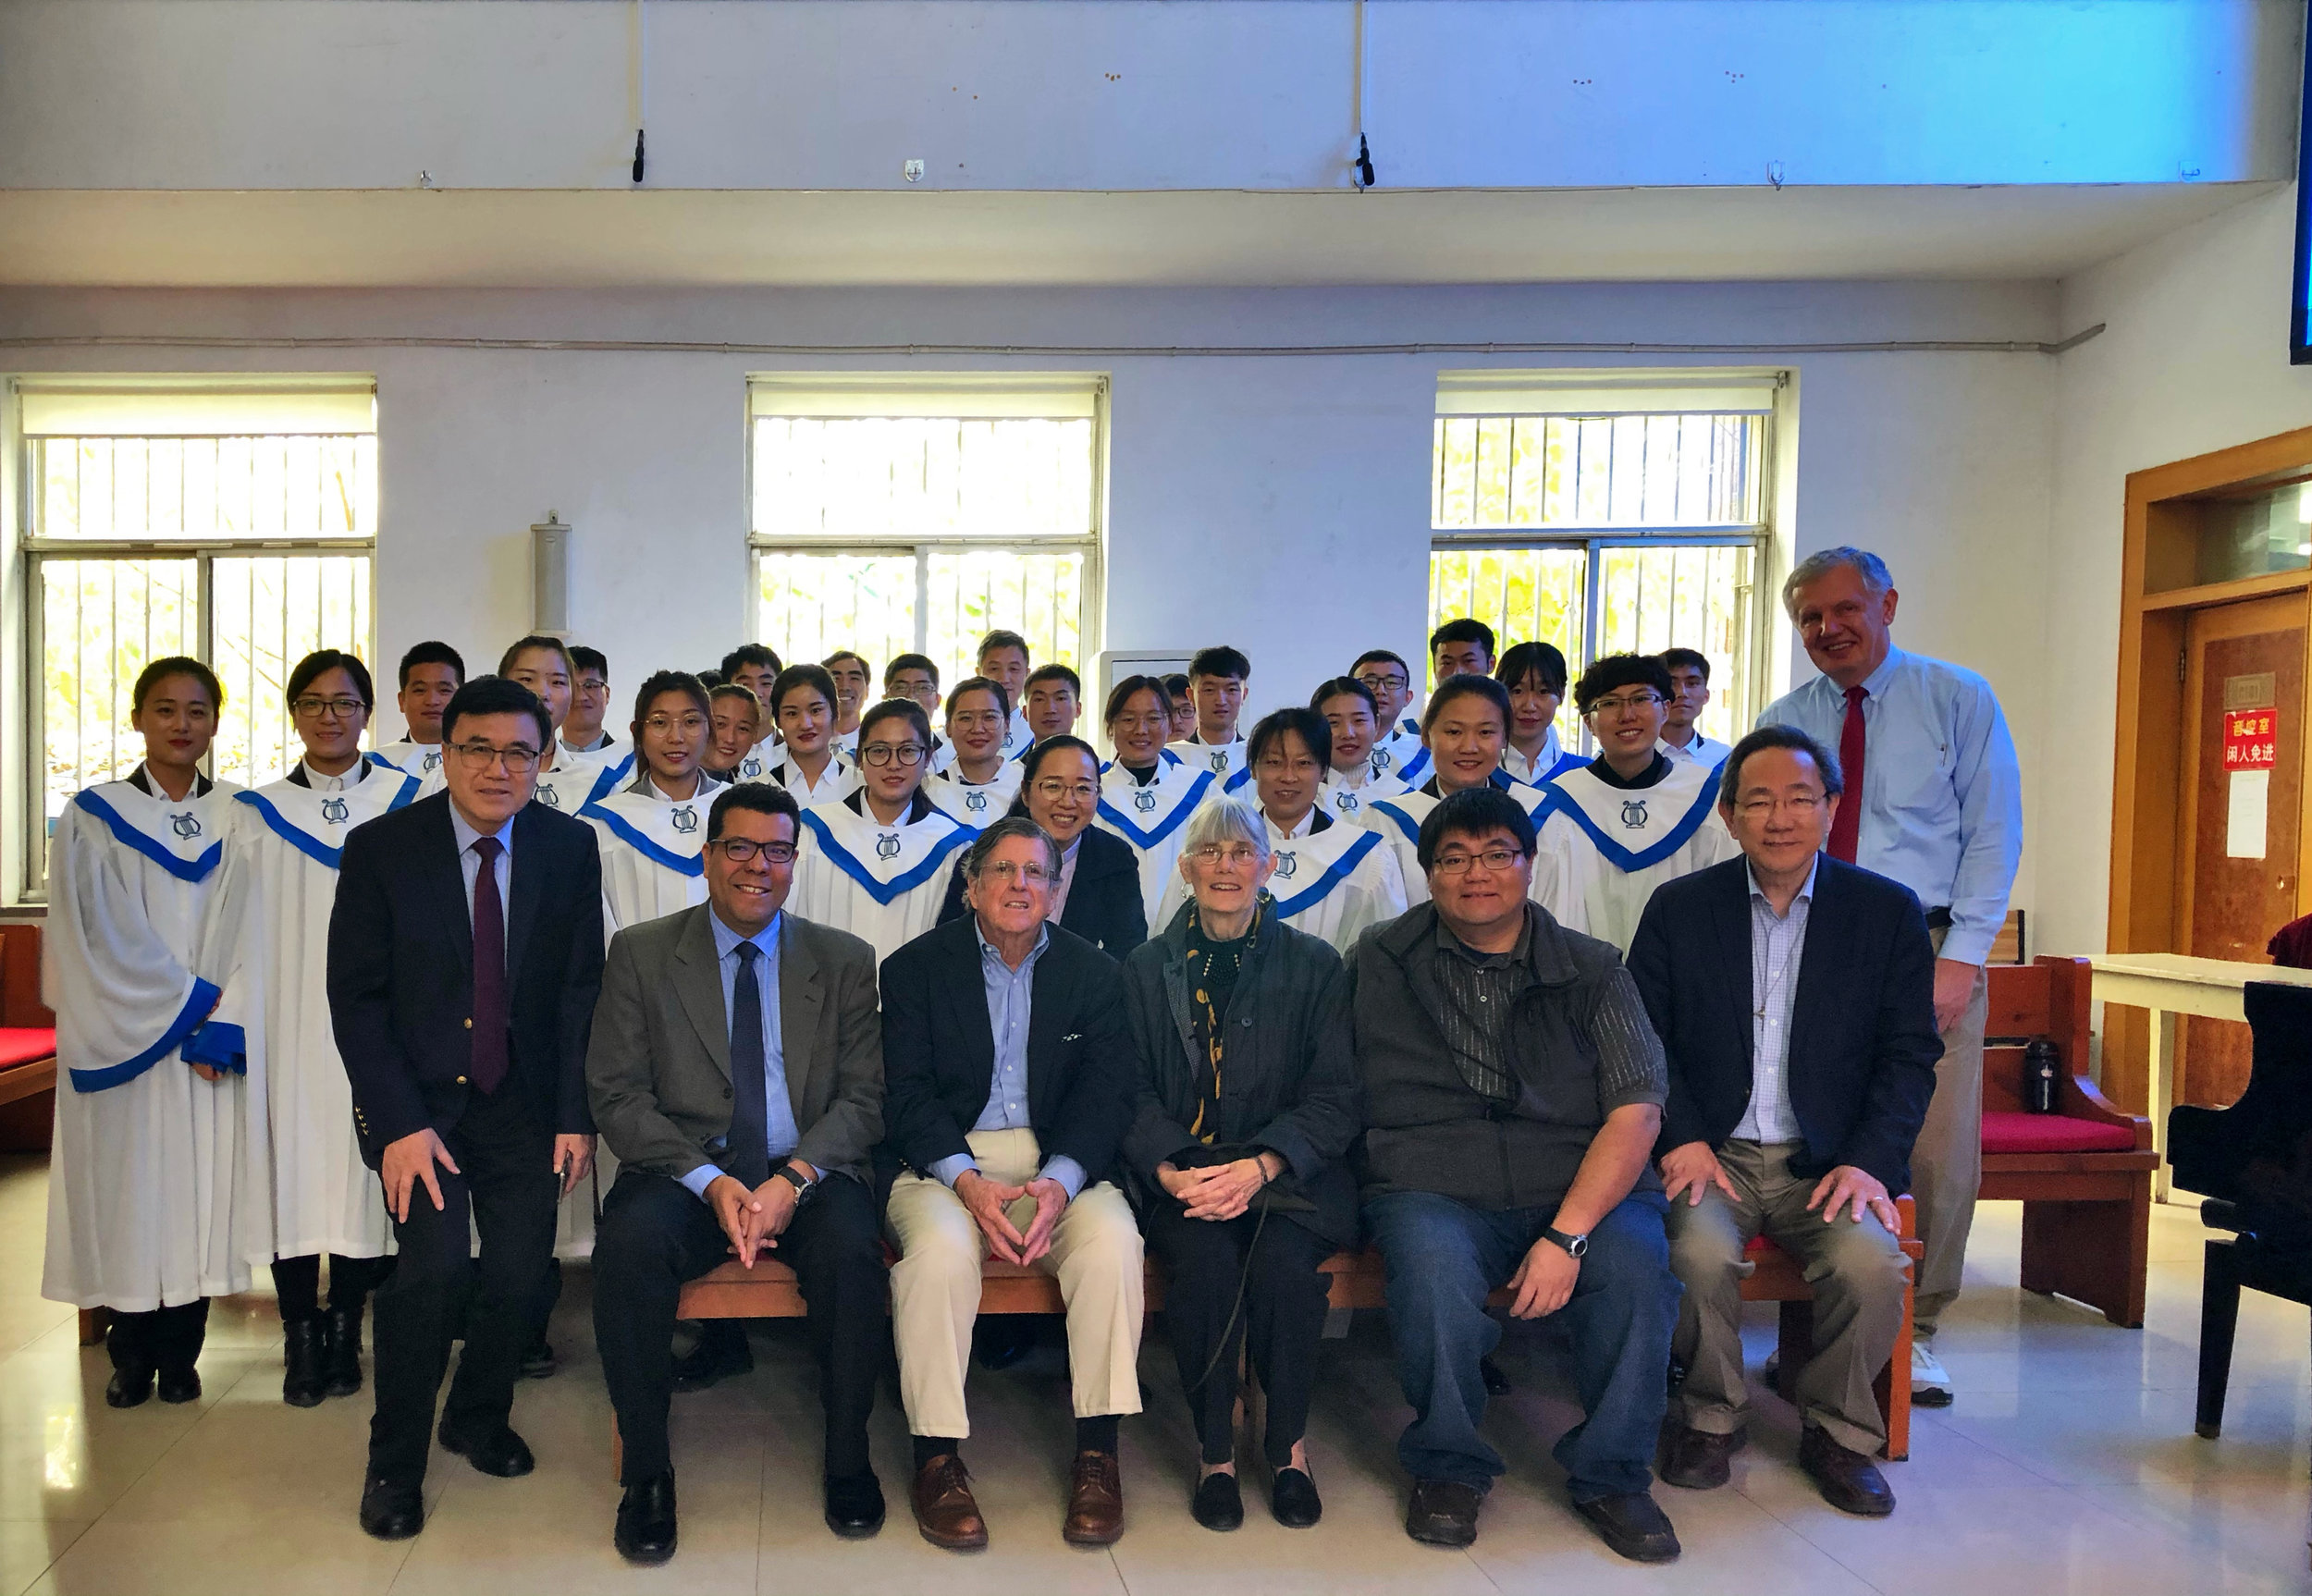  With the choir at Jinan International Church 